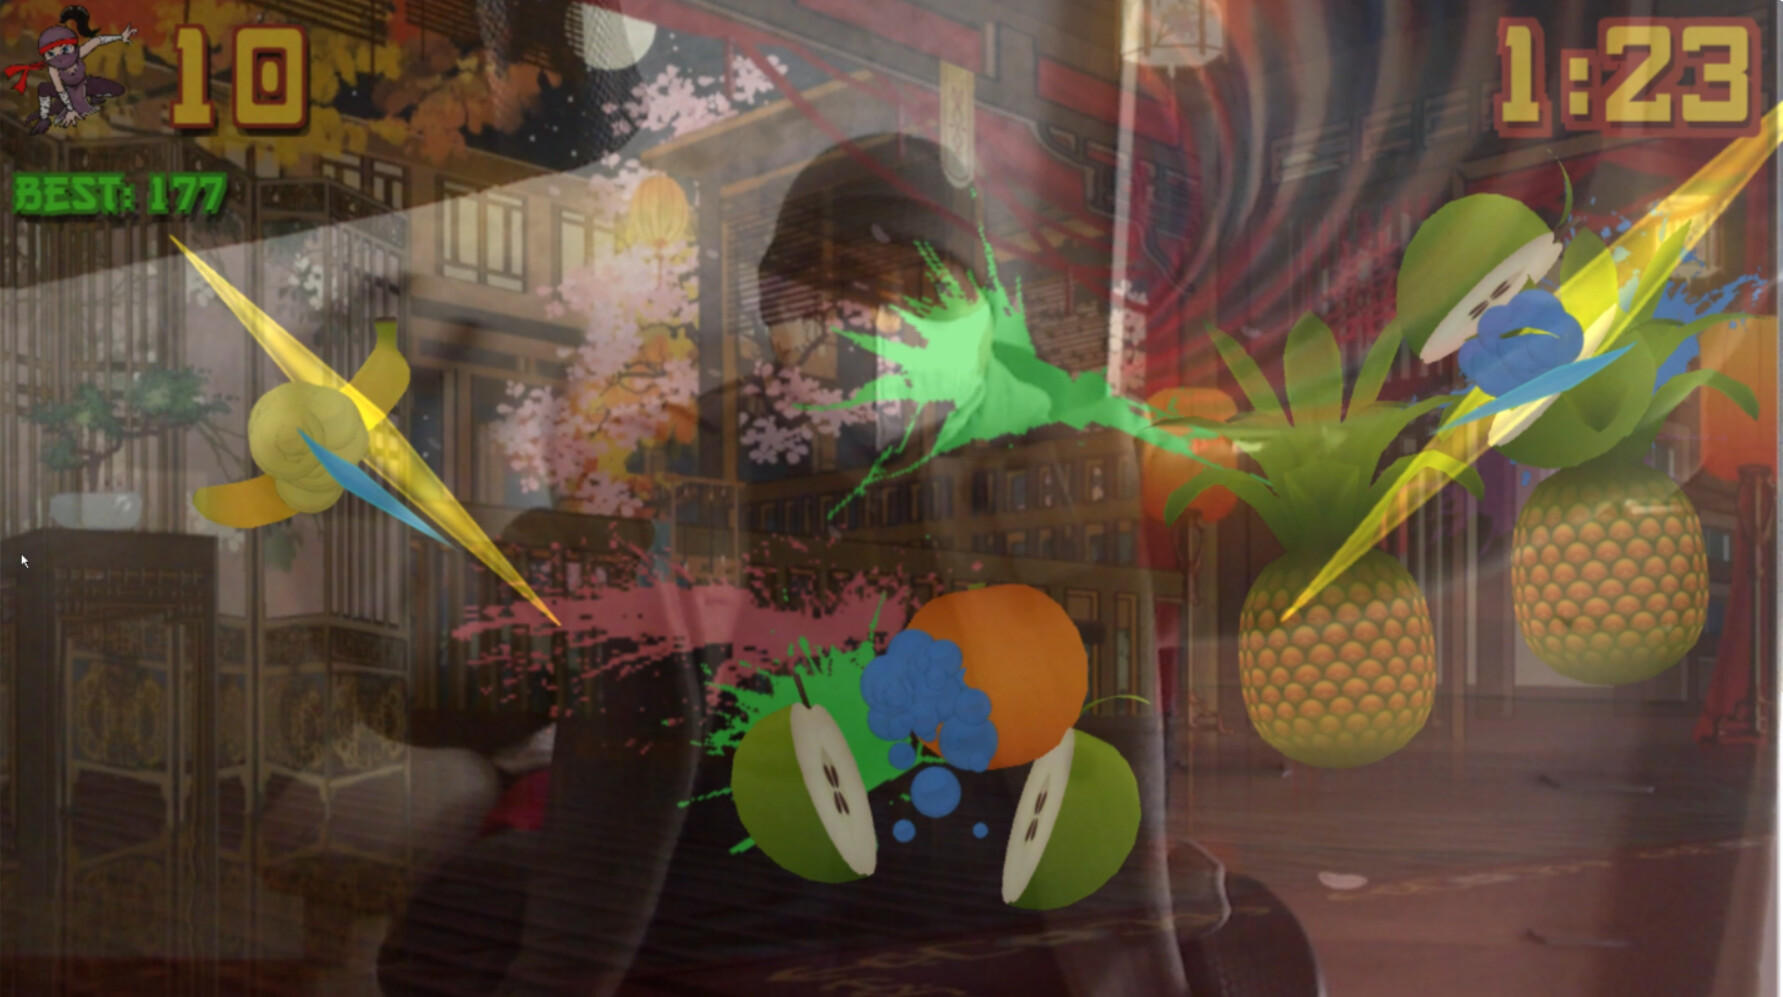 Fruit Slice by Motion Capture screenshot game